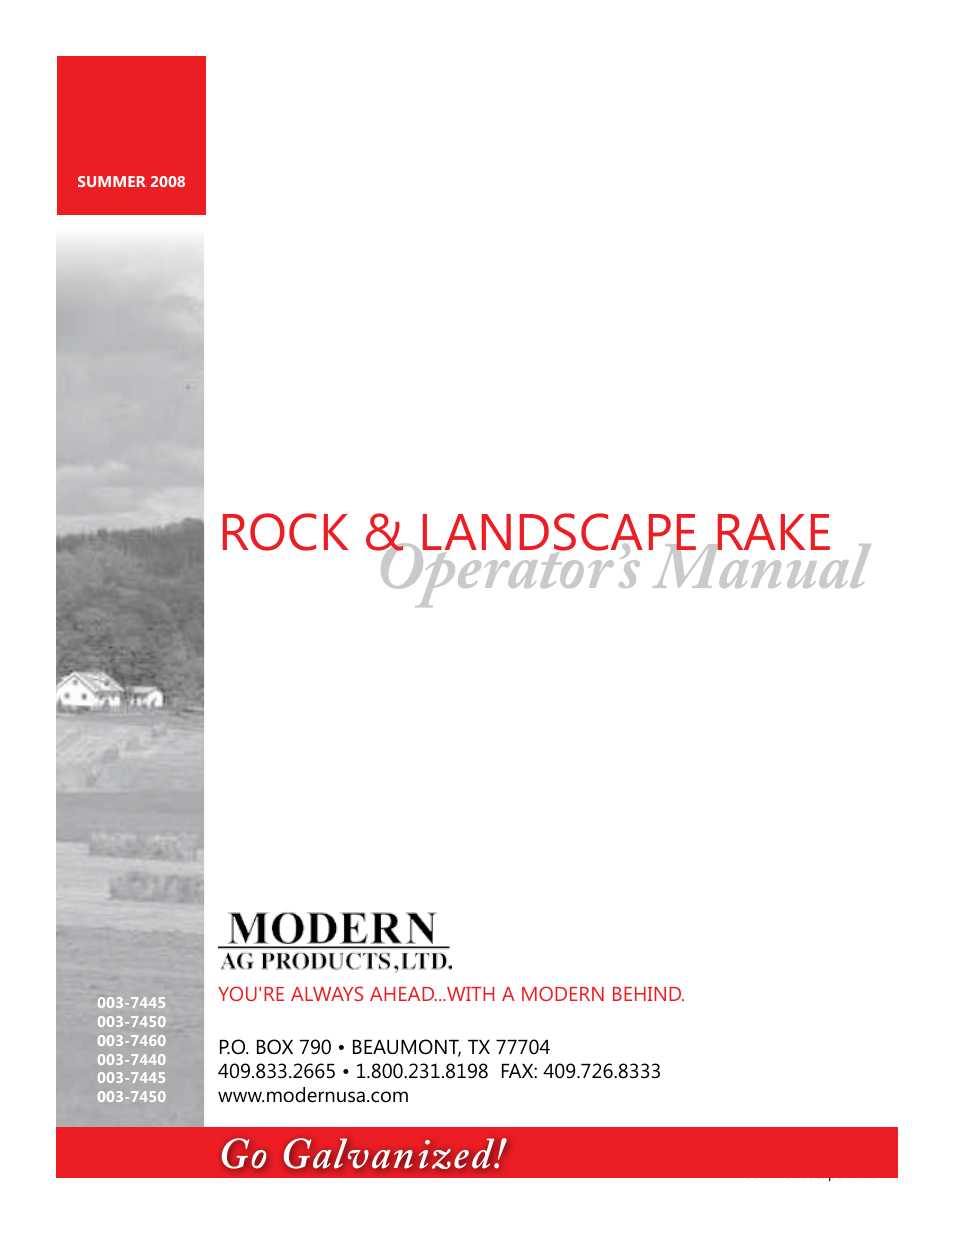 Rock & Landscape Rakes